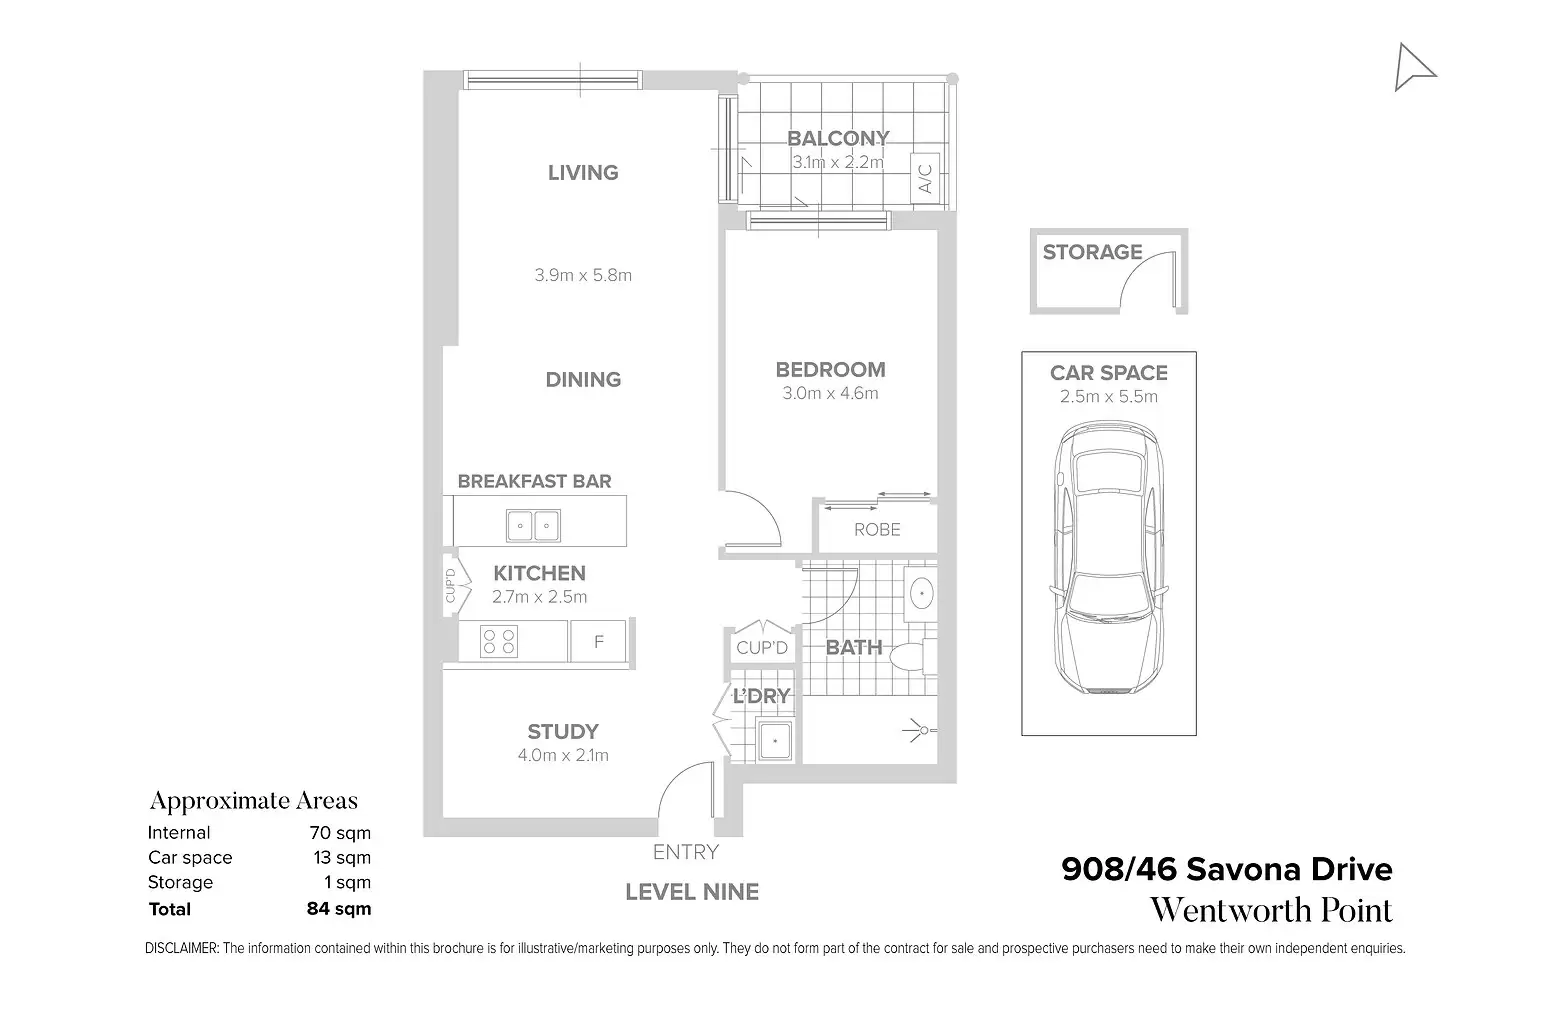 908/46 Savona Drive, Wentworth Point Sold by Chidiac Realty - floorplan